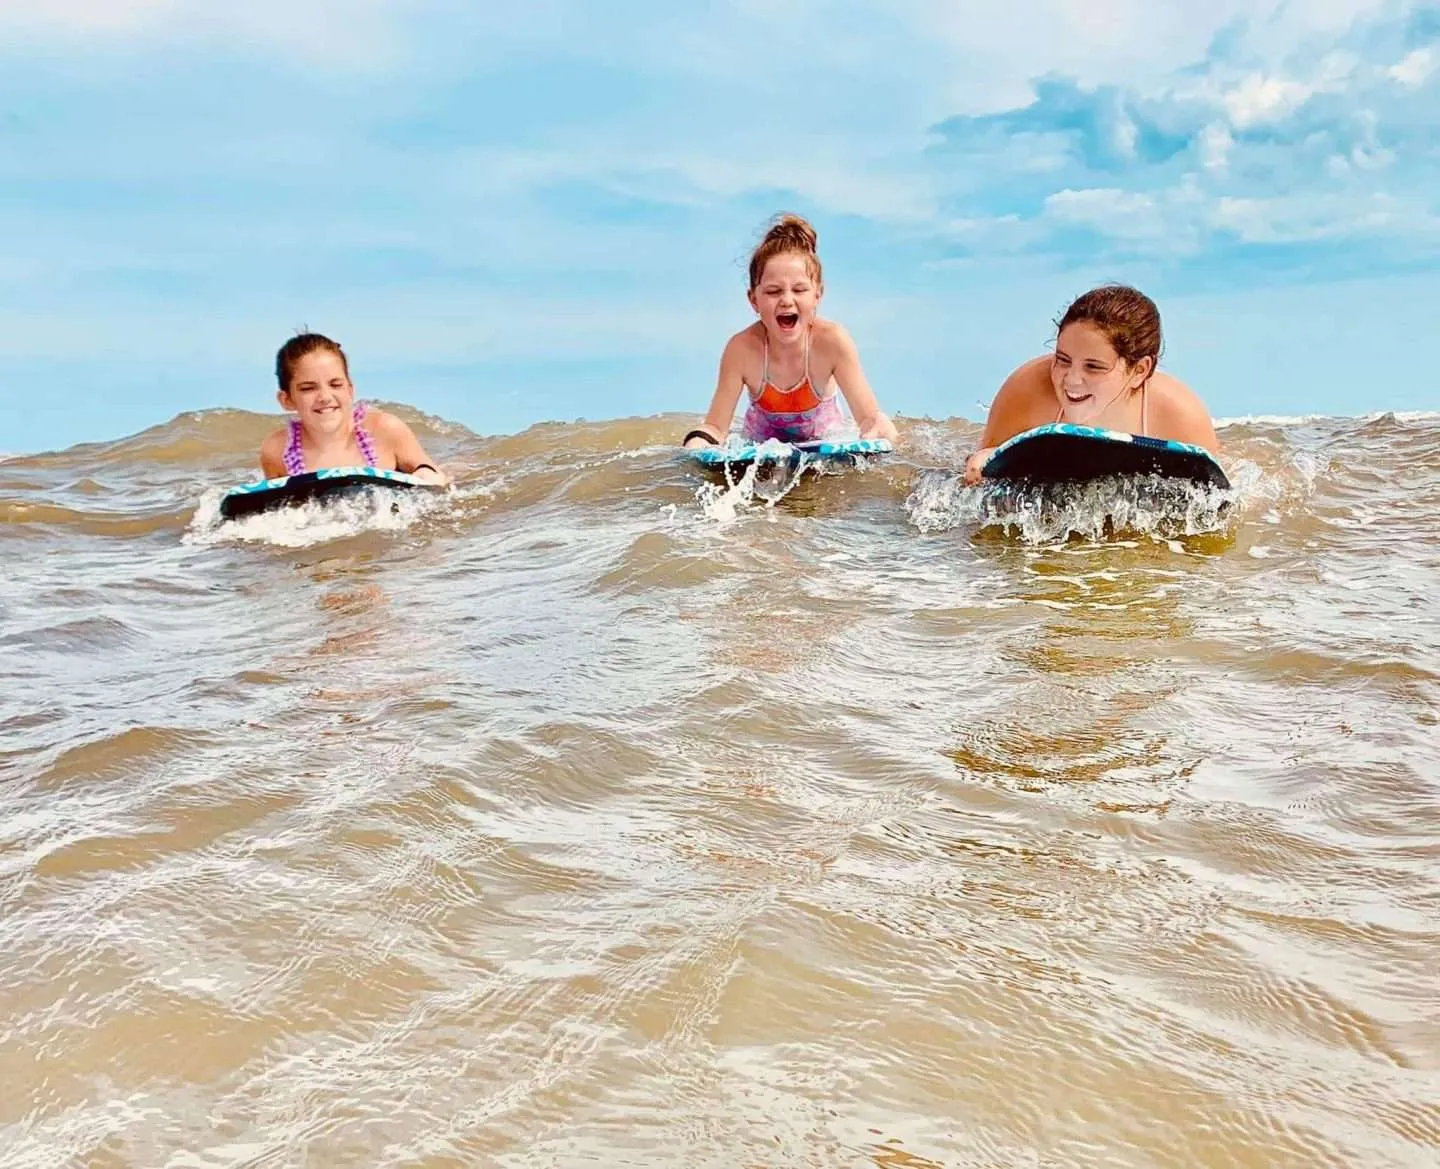 Girls riding boogie boards at a Texas beach. A summer adventure.